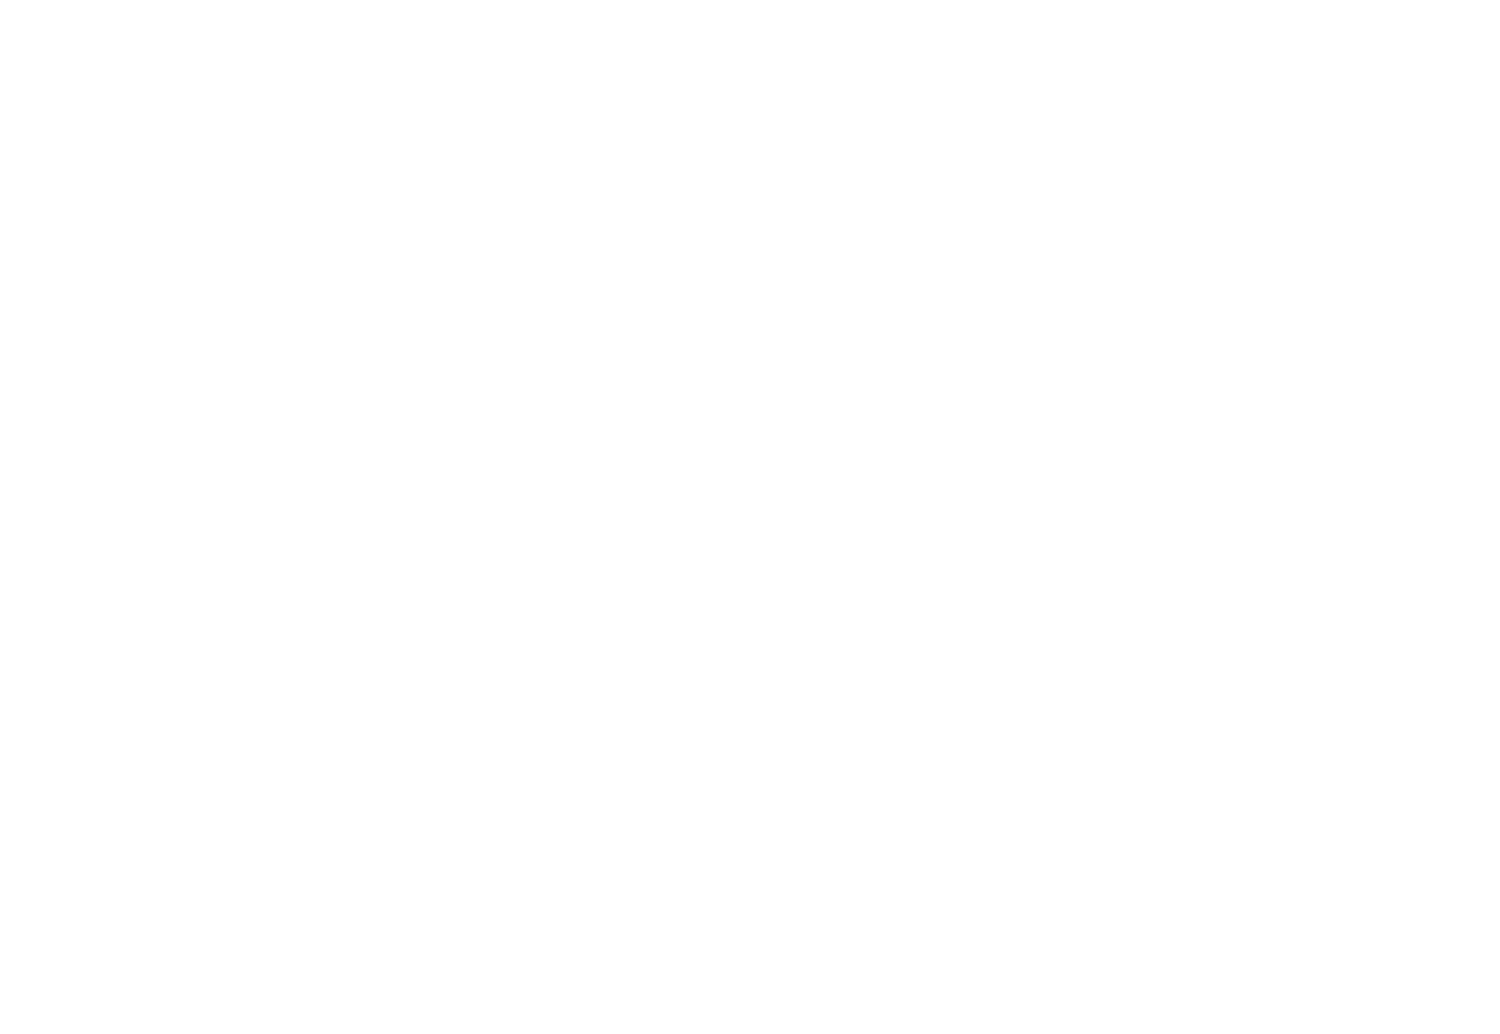 Local Edition Creative